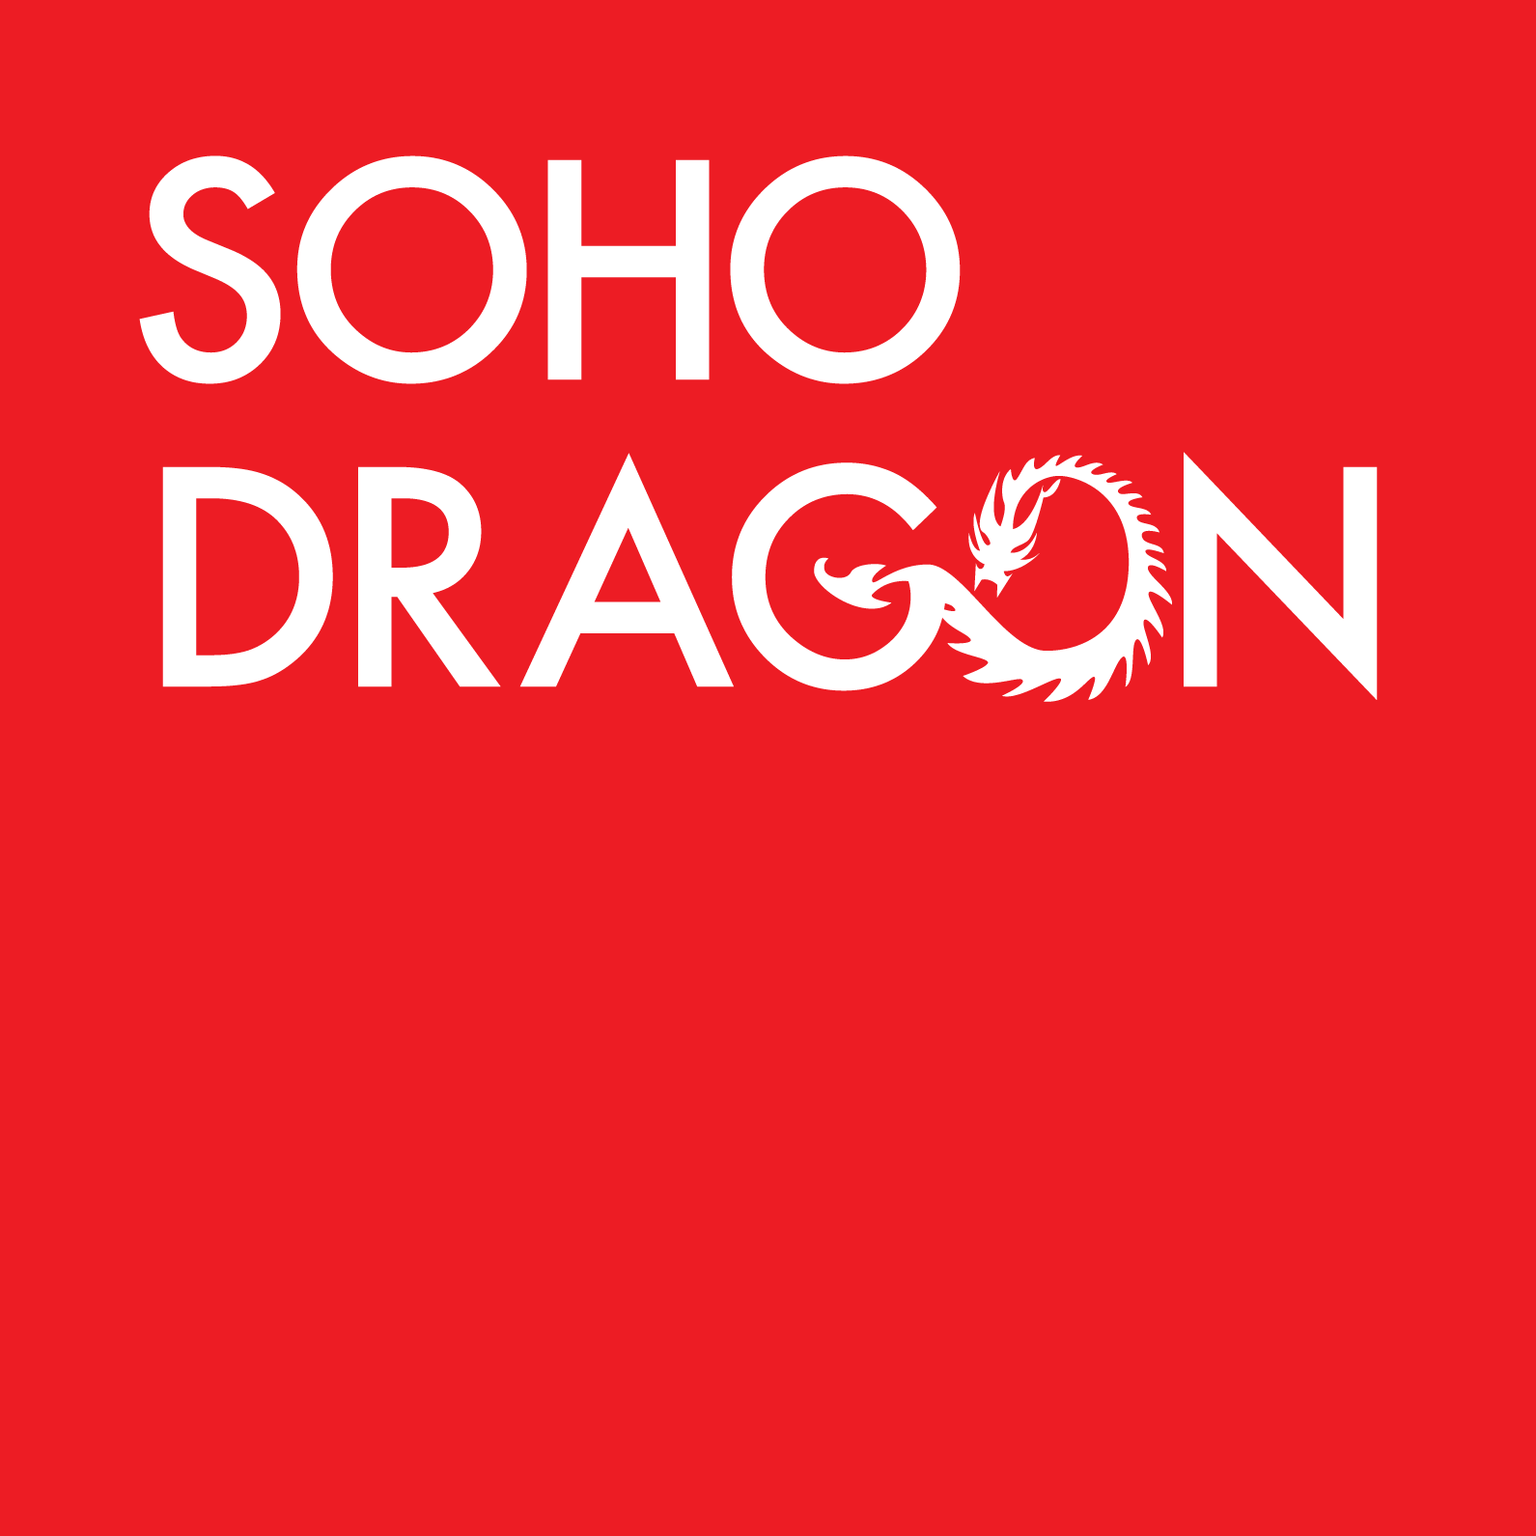 Soho Dragon profile on Qualified.One